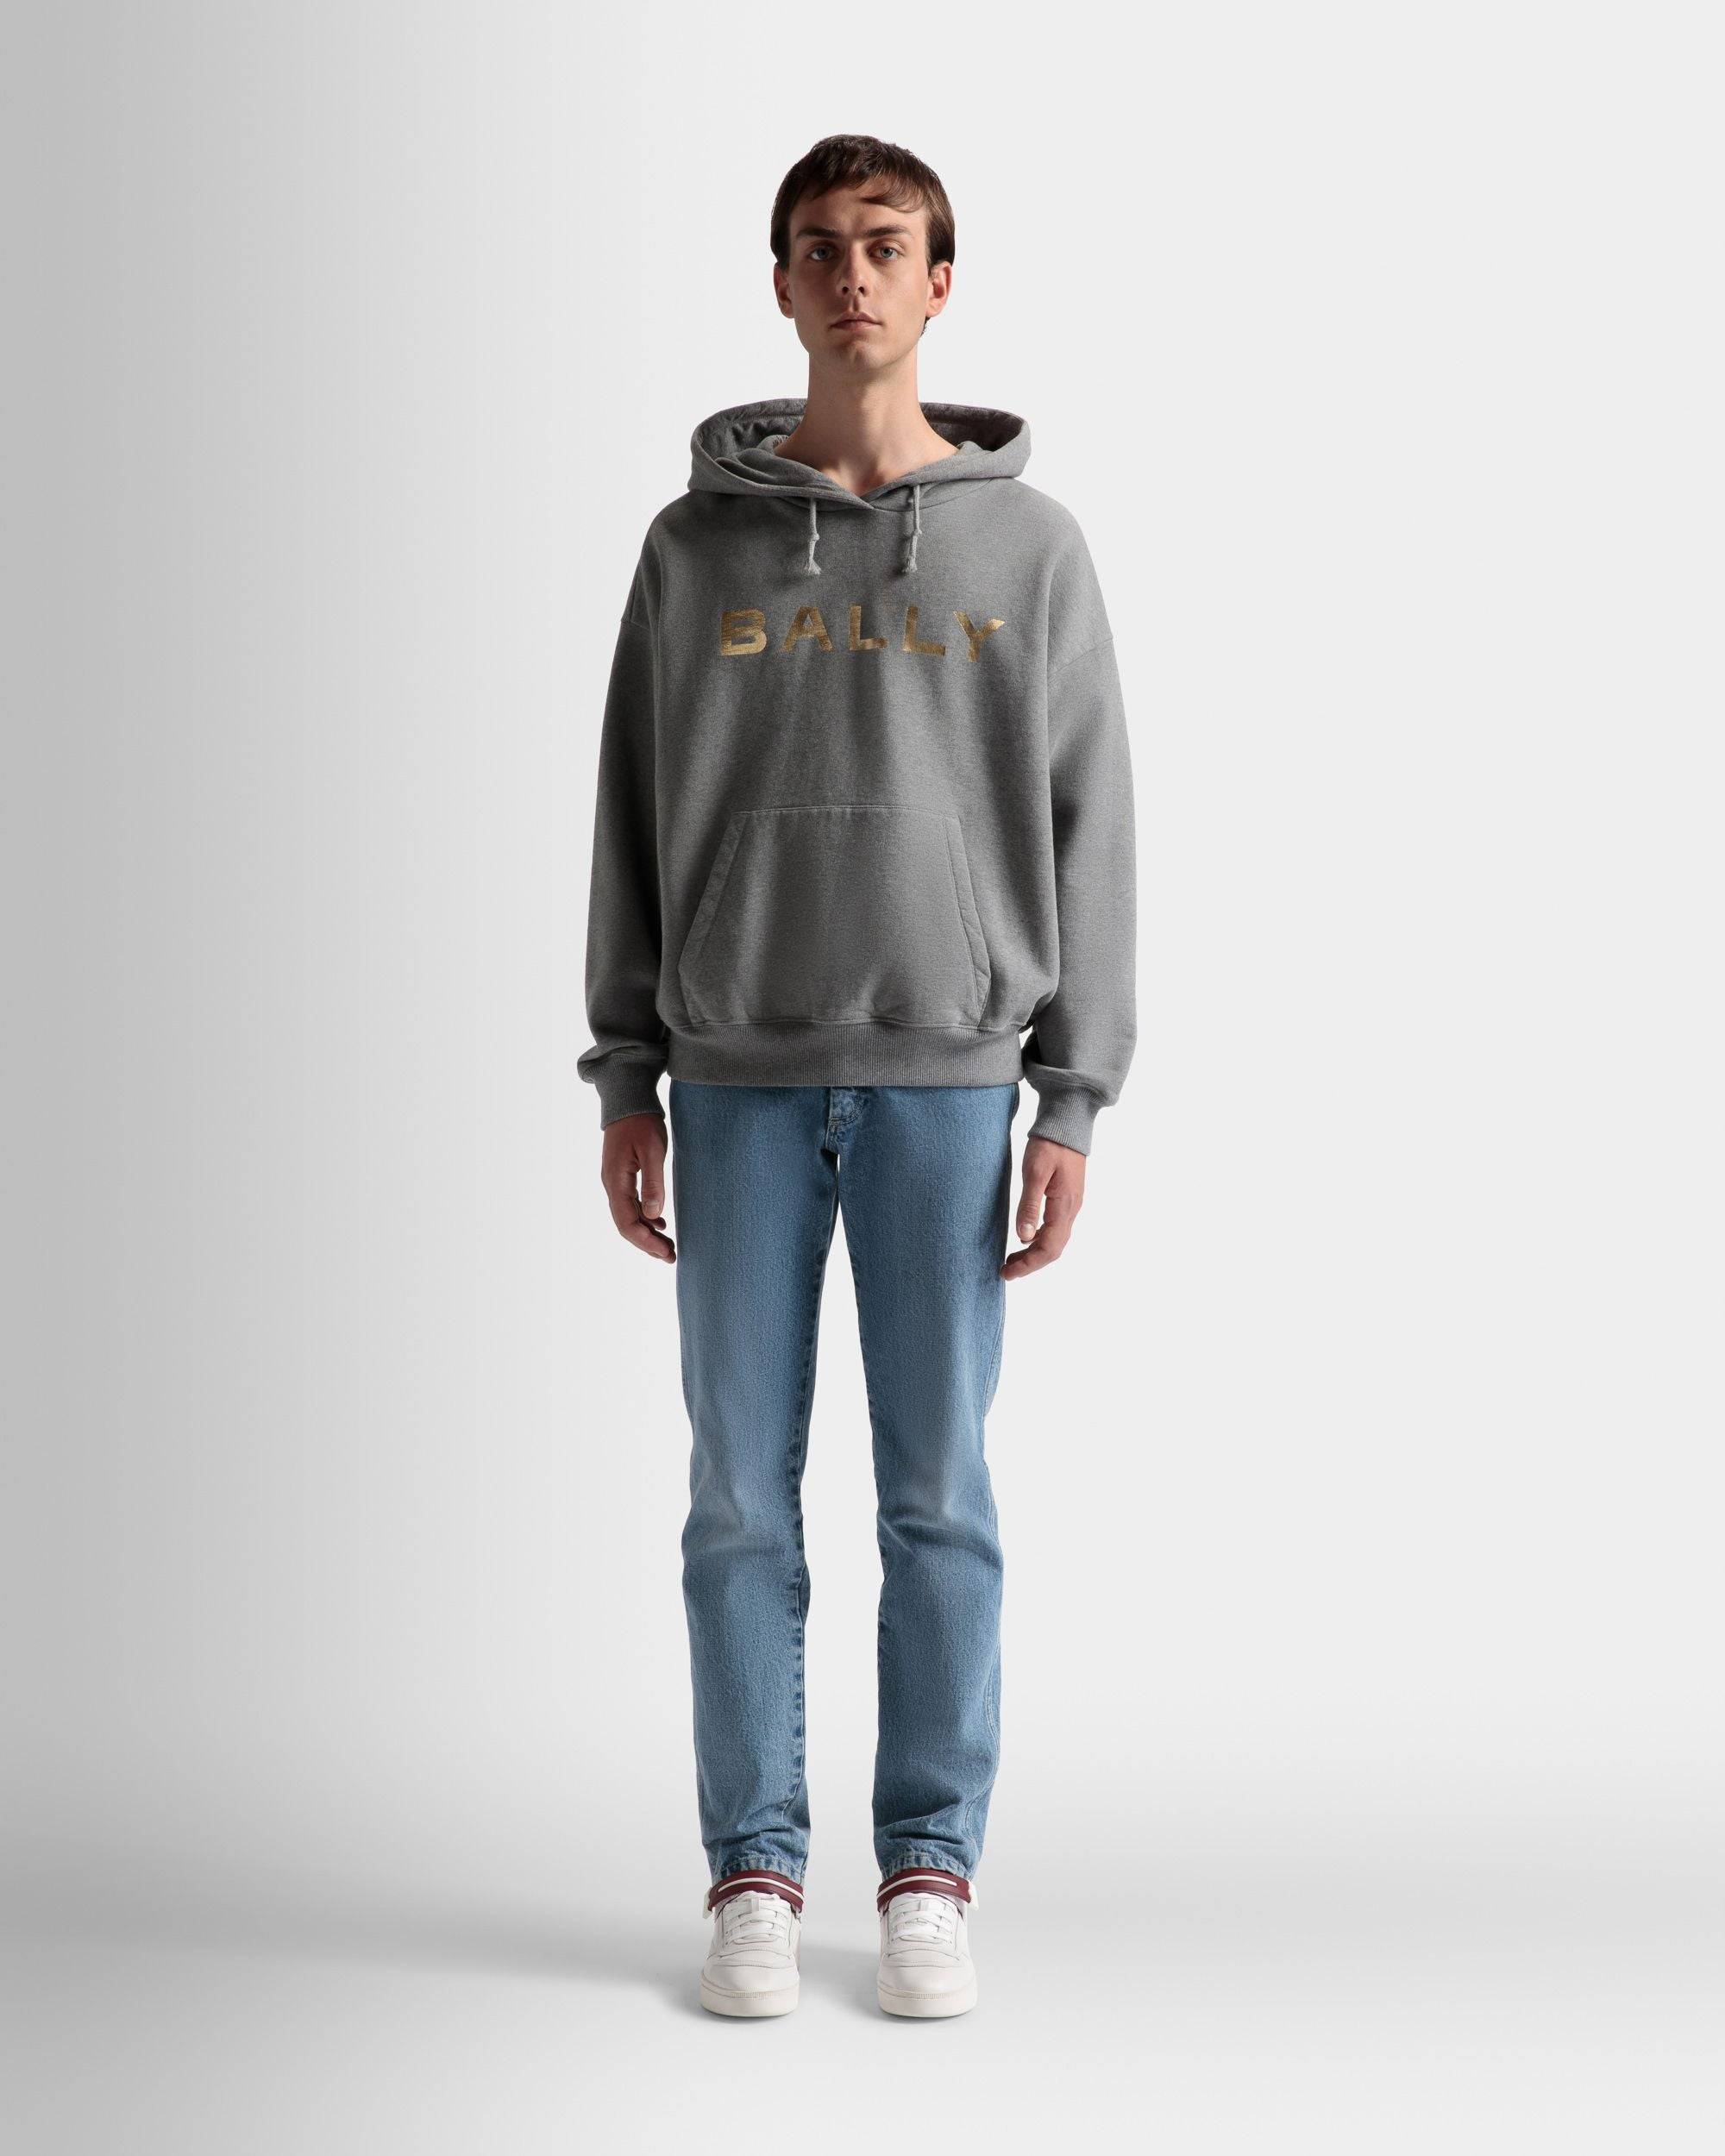 Logo Hooded Sweatshirt | Men's Sweatshirt | Grey Melange Cotton | Bally | On Model Front